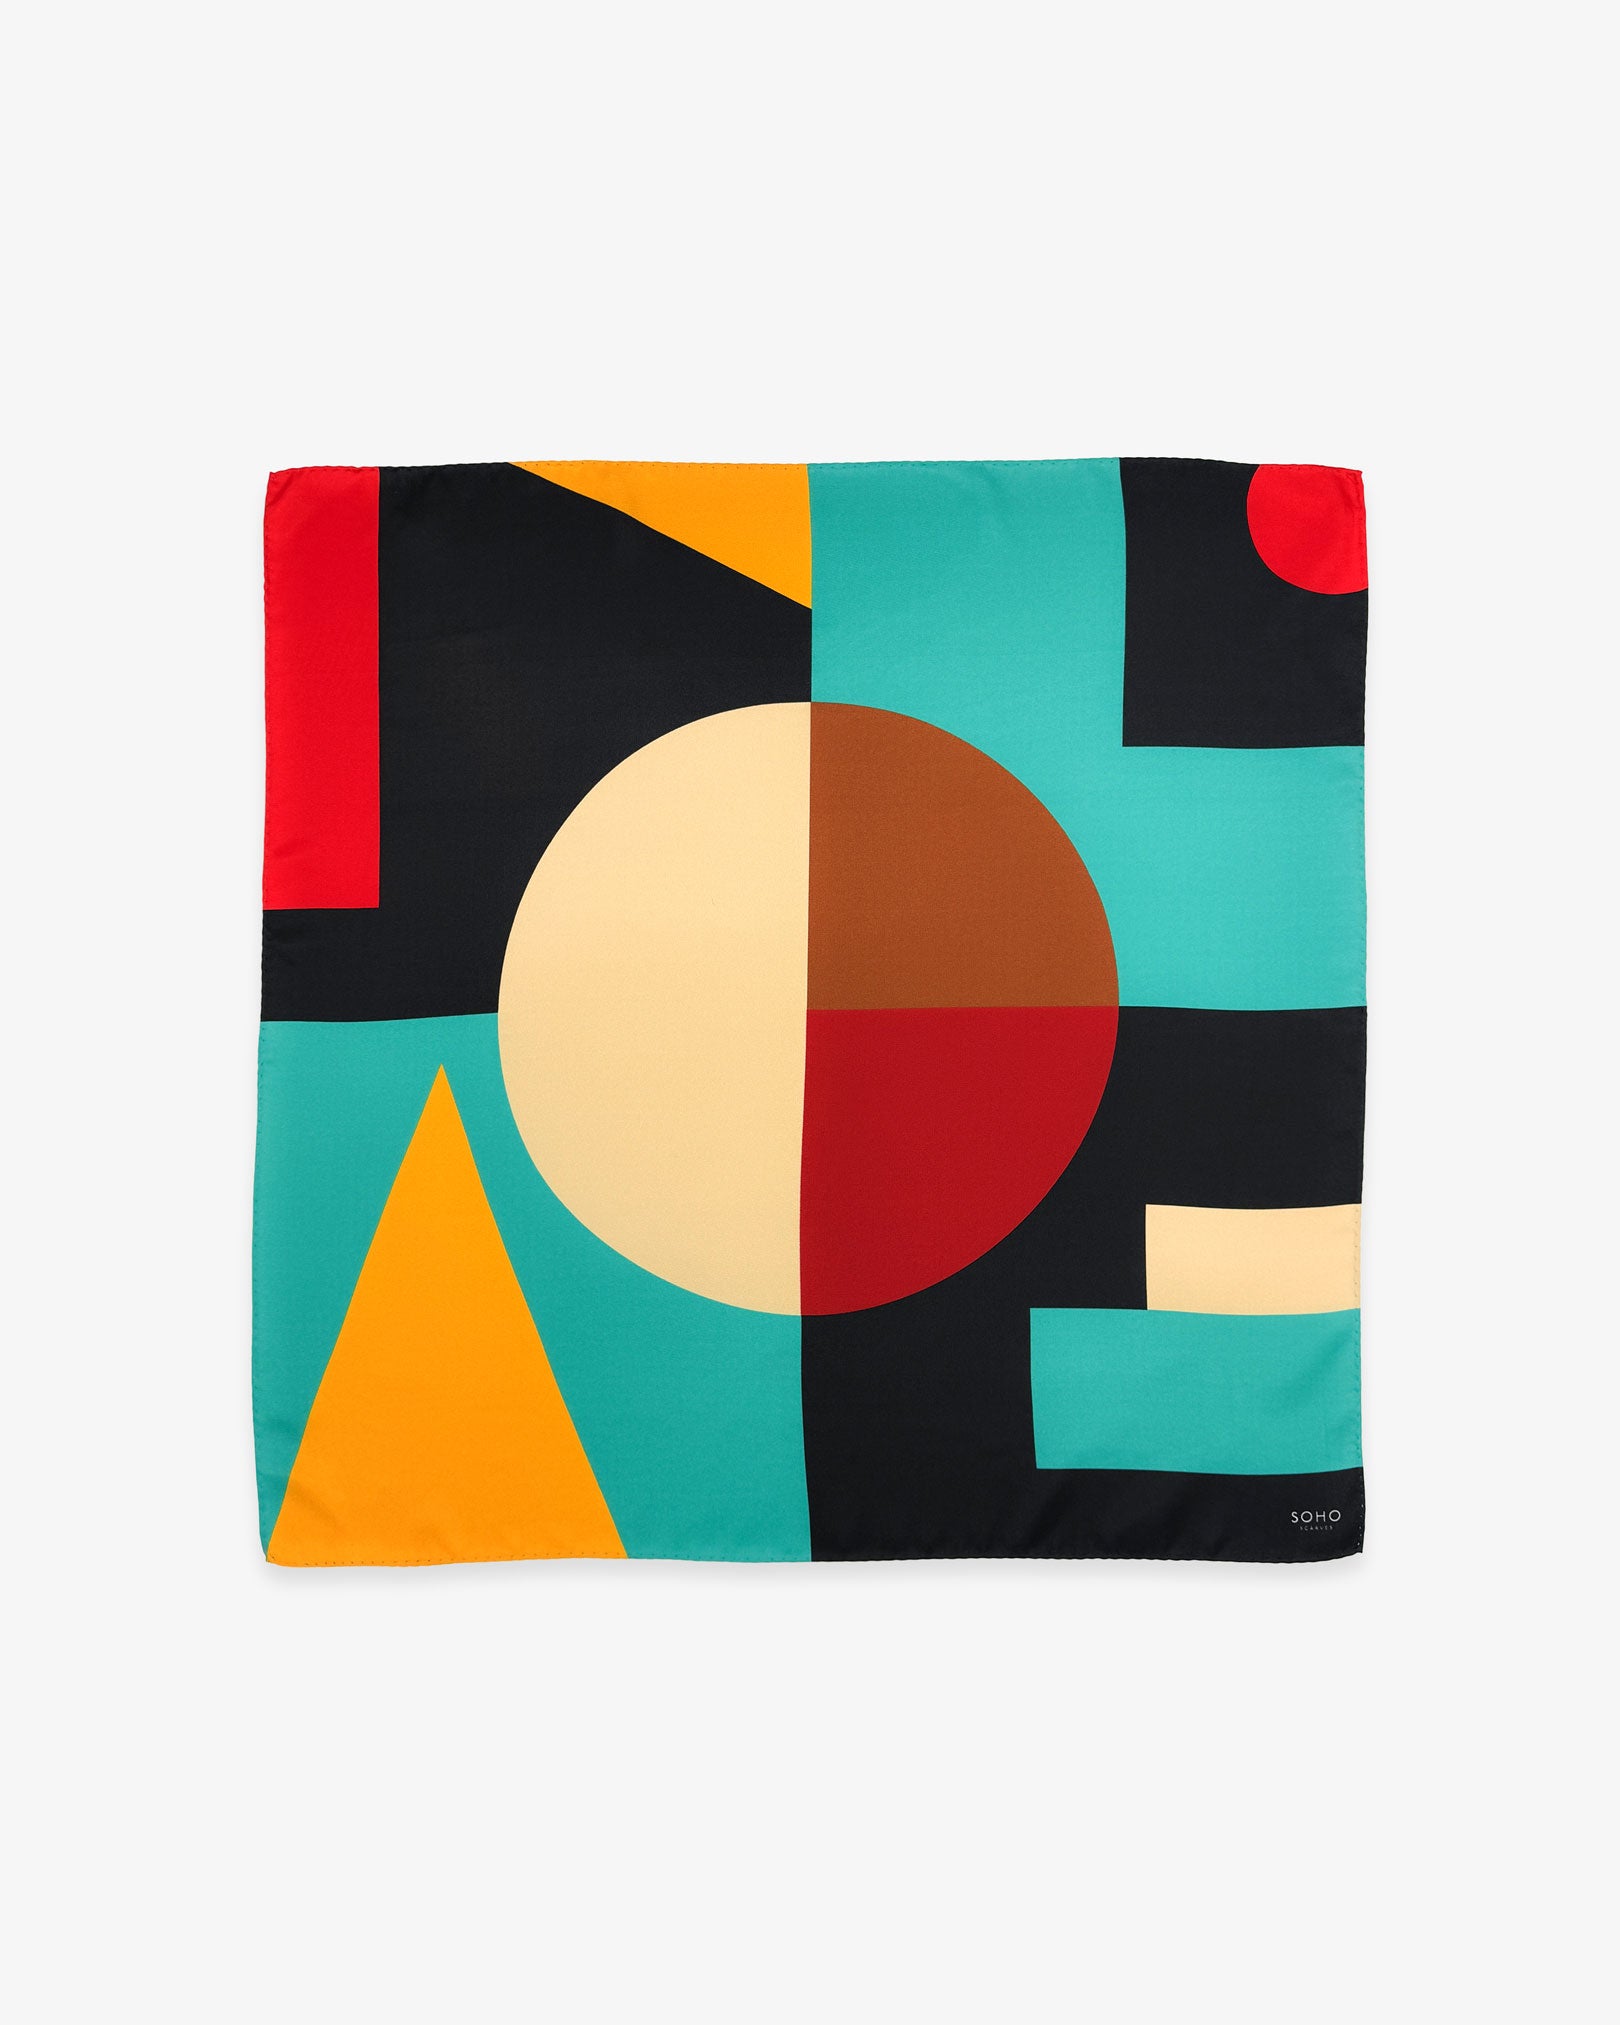 Unfolded 'Berlin' silk neckerchief, showing the full pattern of geometric blocks in a Bauhaus inspired, multicoloured palette.